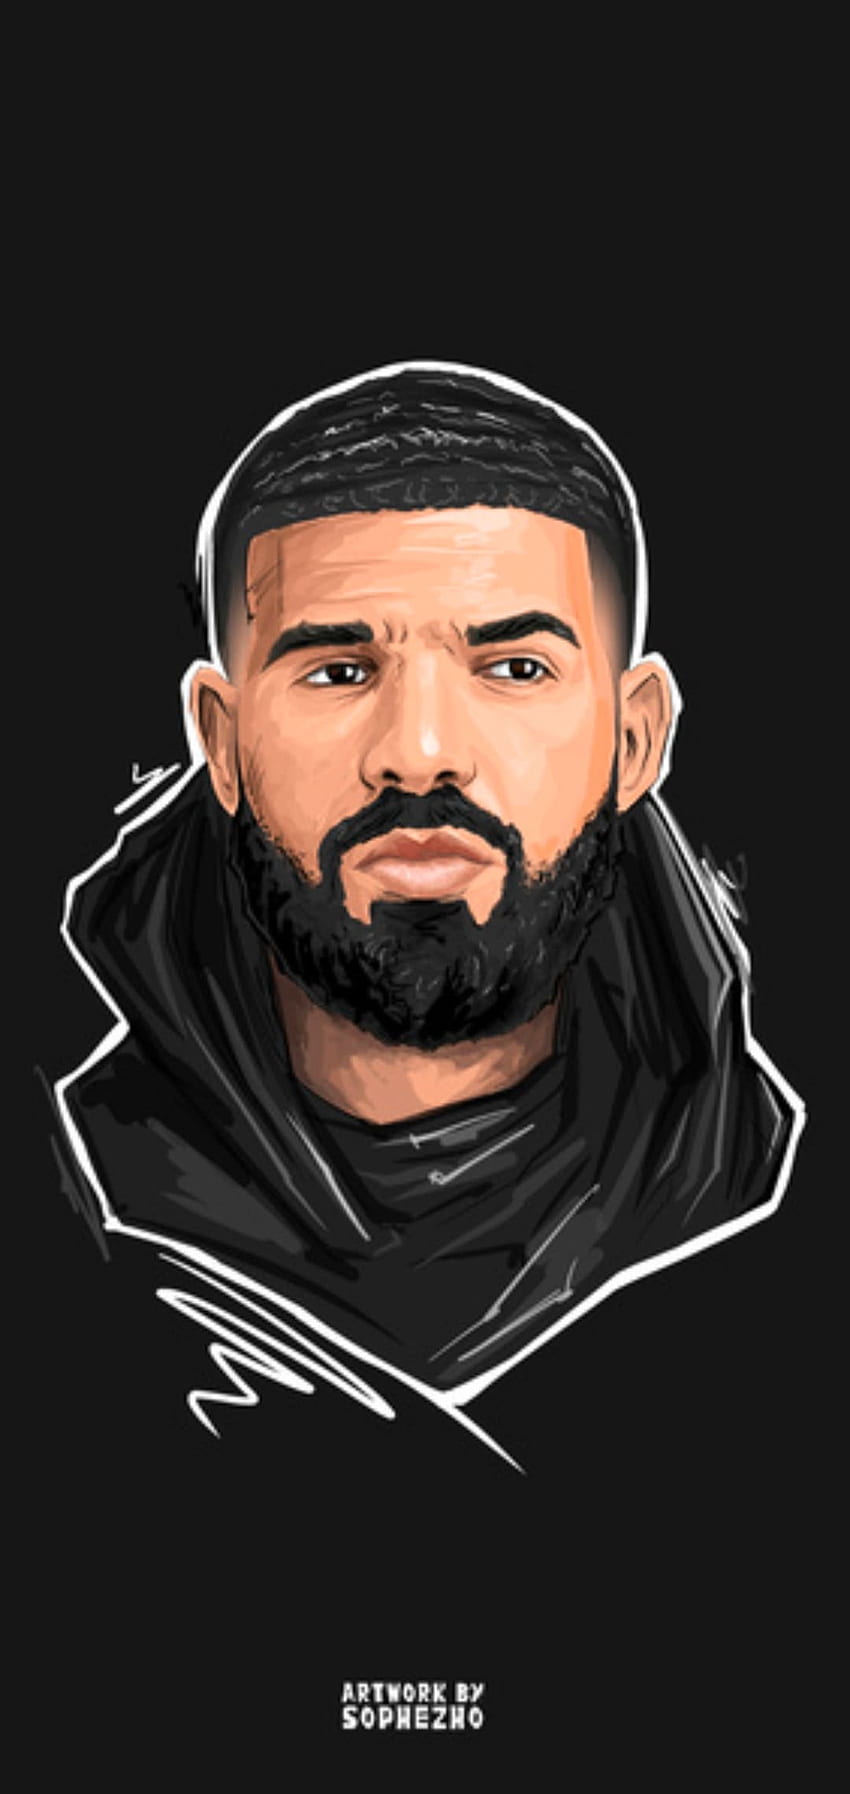 Drizzy Drake  Drake wallpapers Drake photos Photo and video editor